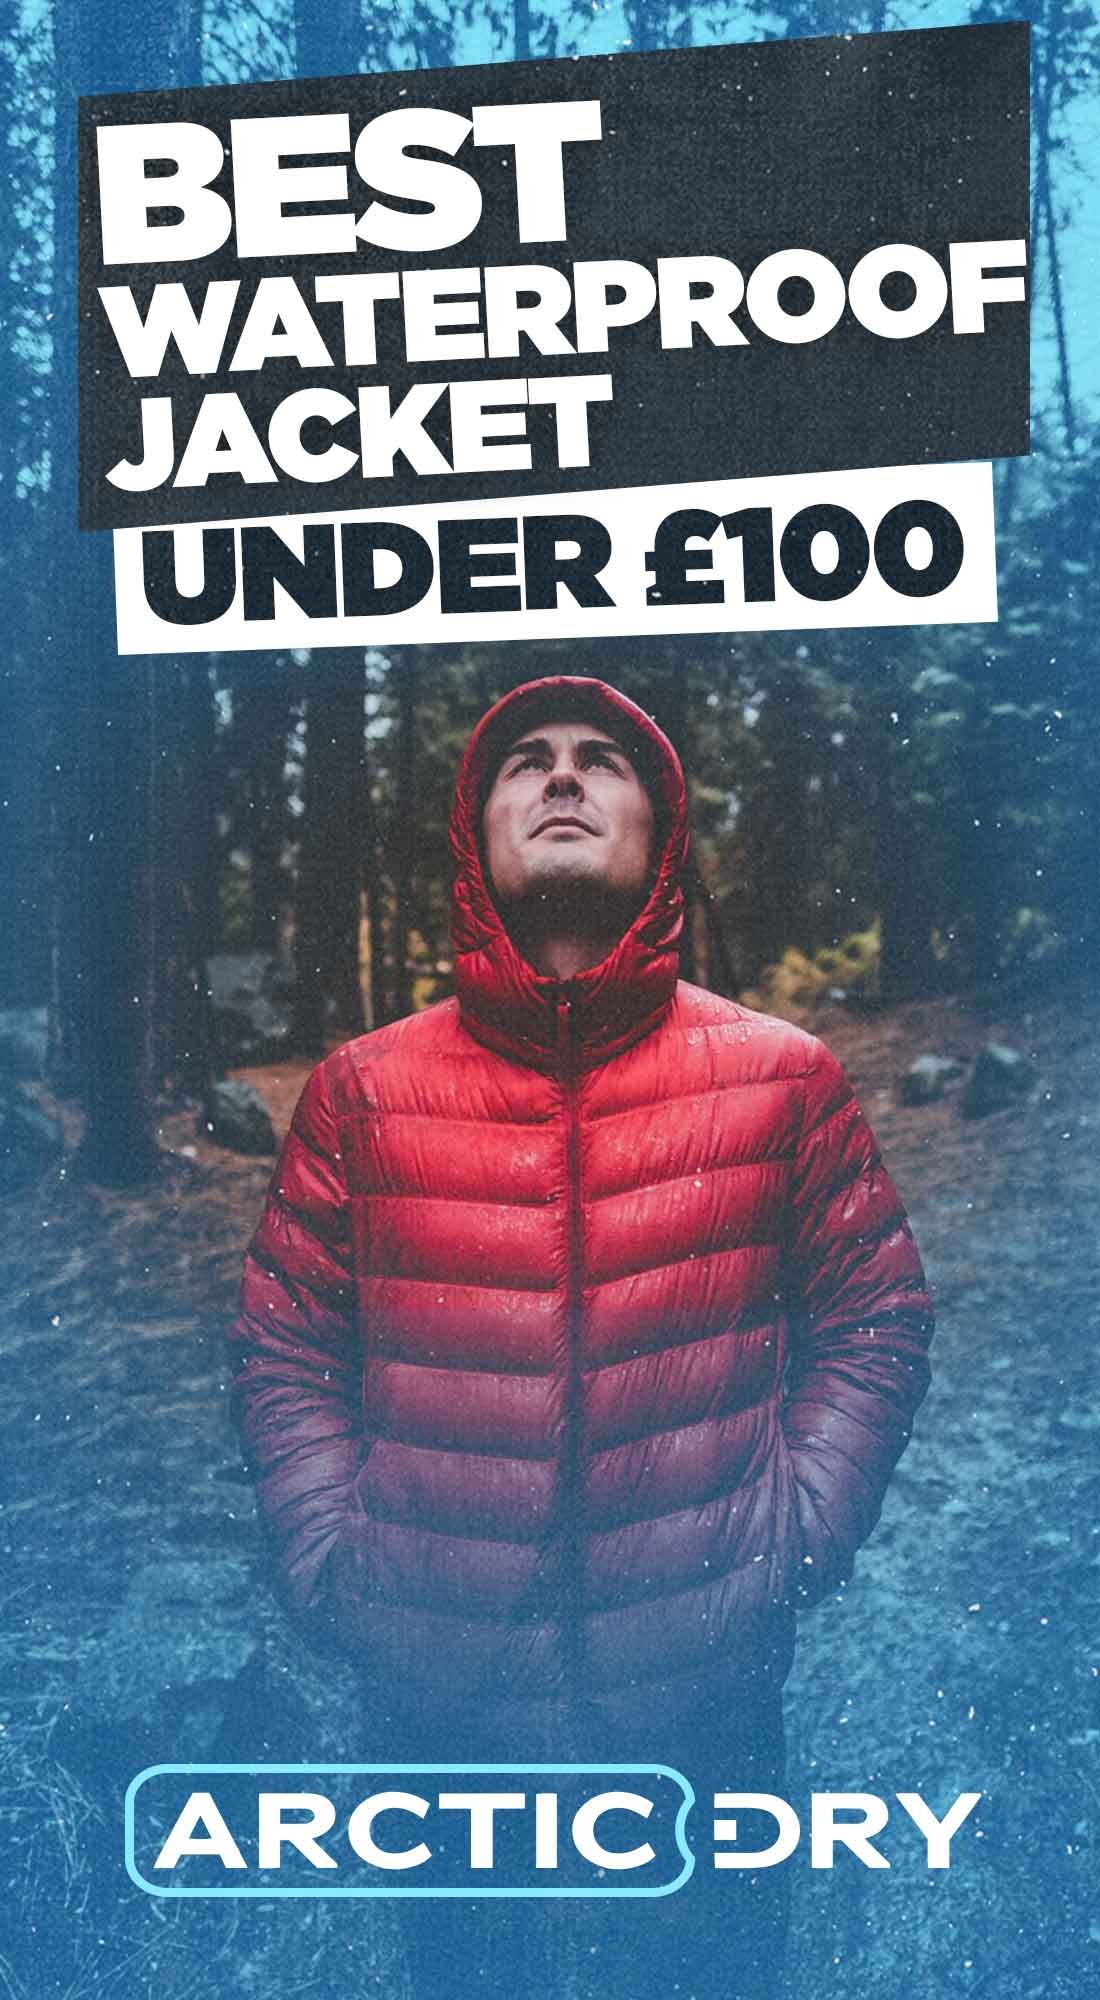 The Best Waterproof Jacket Under £100 